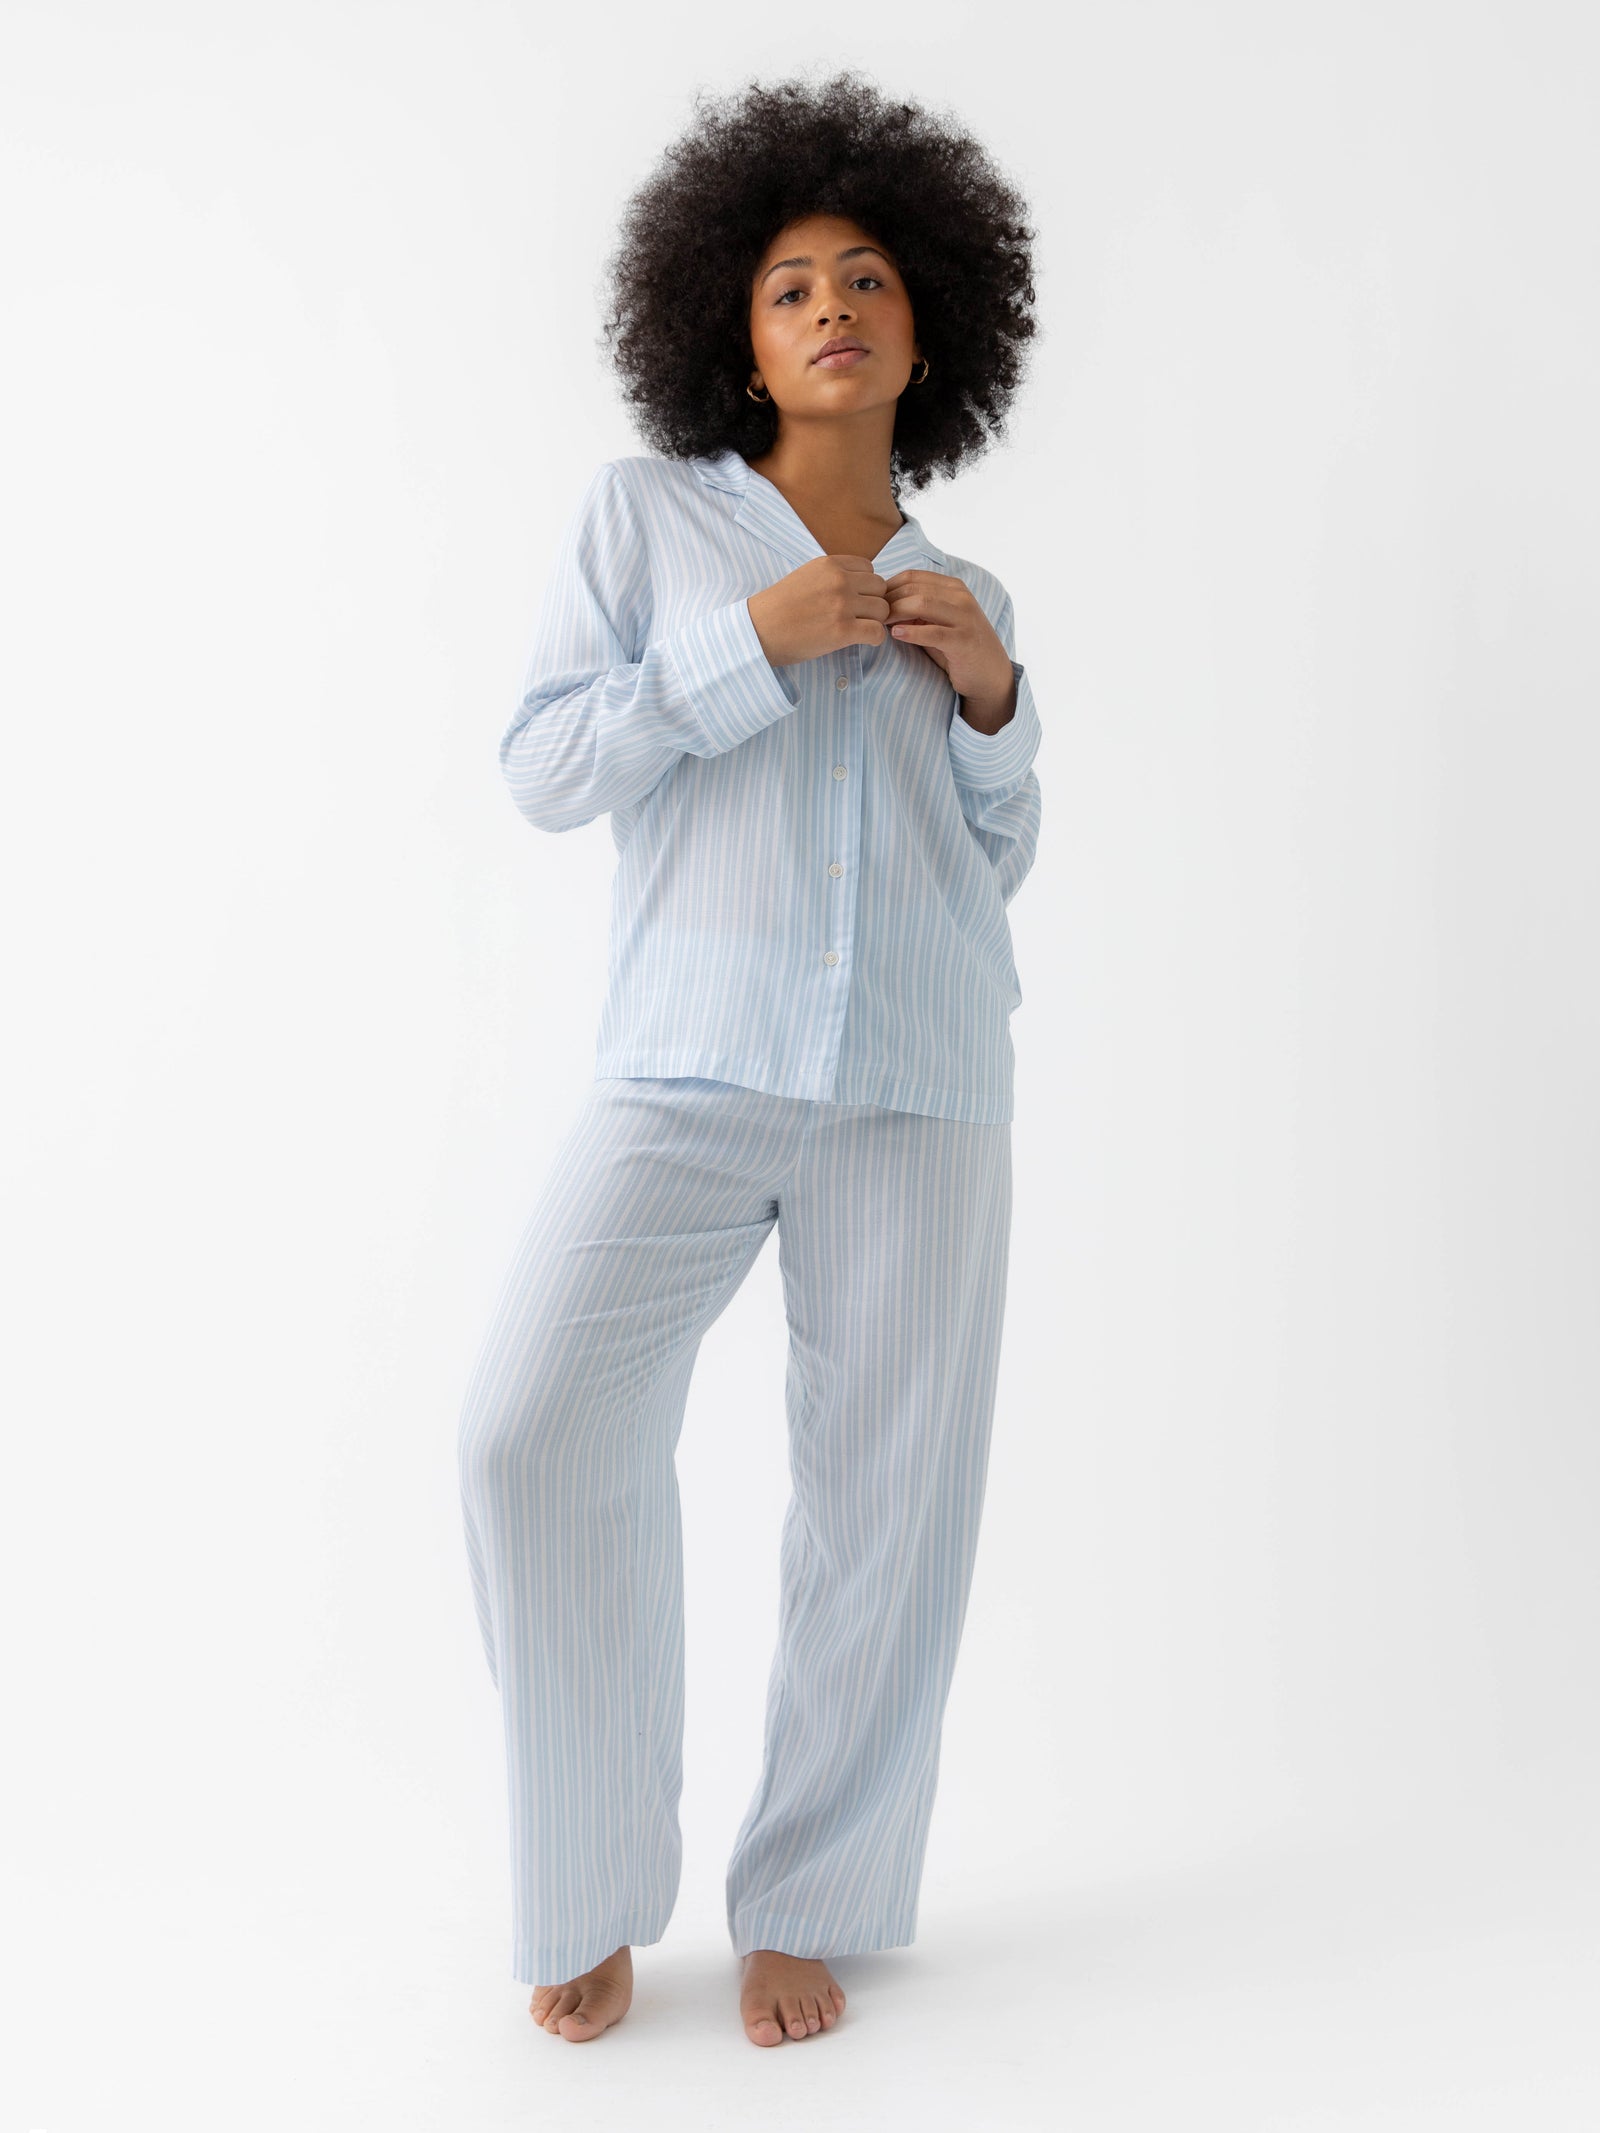 Woman wearing spring blue stripe pajama set with white background 